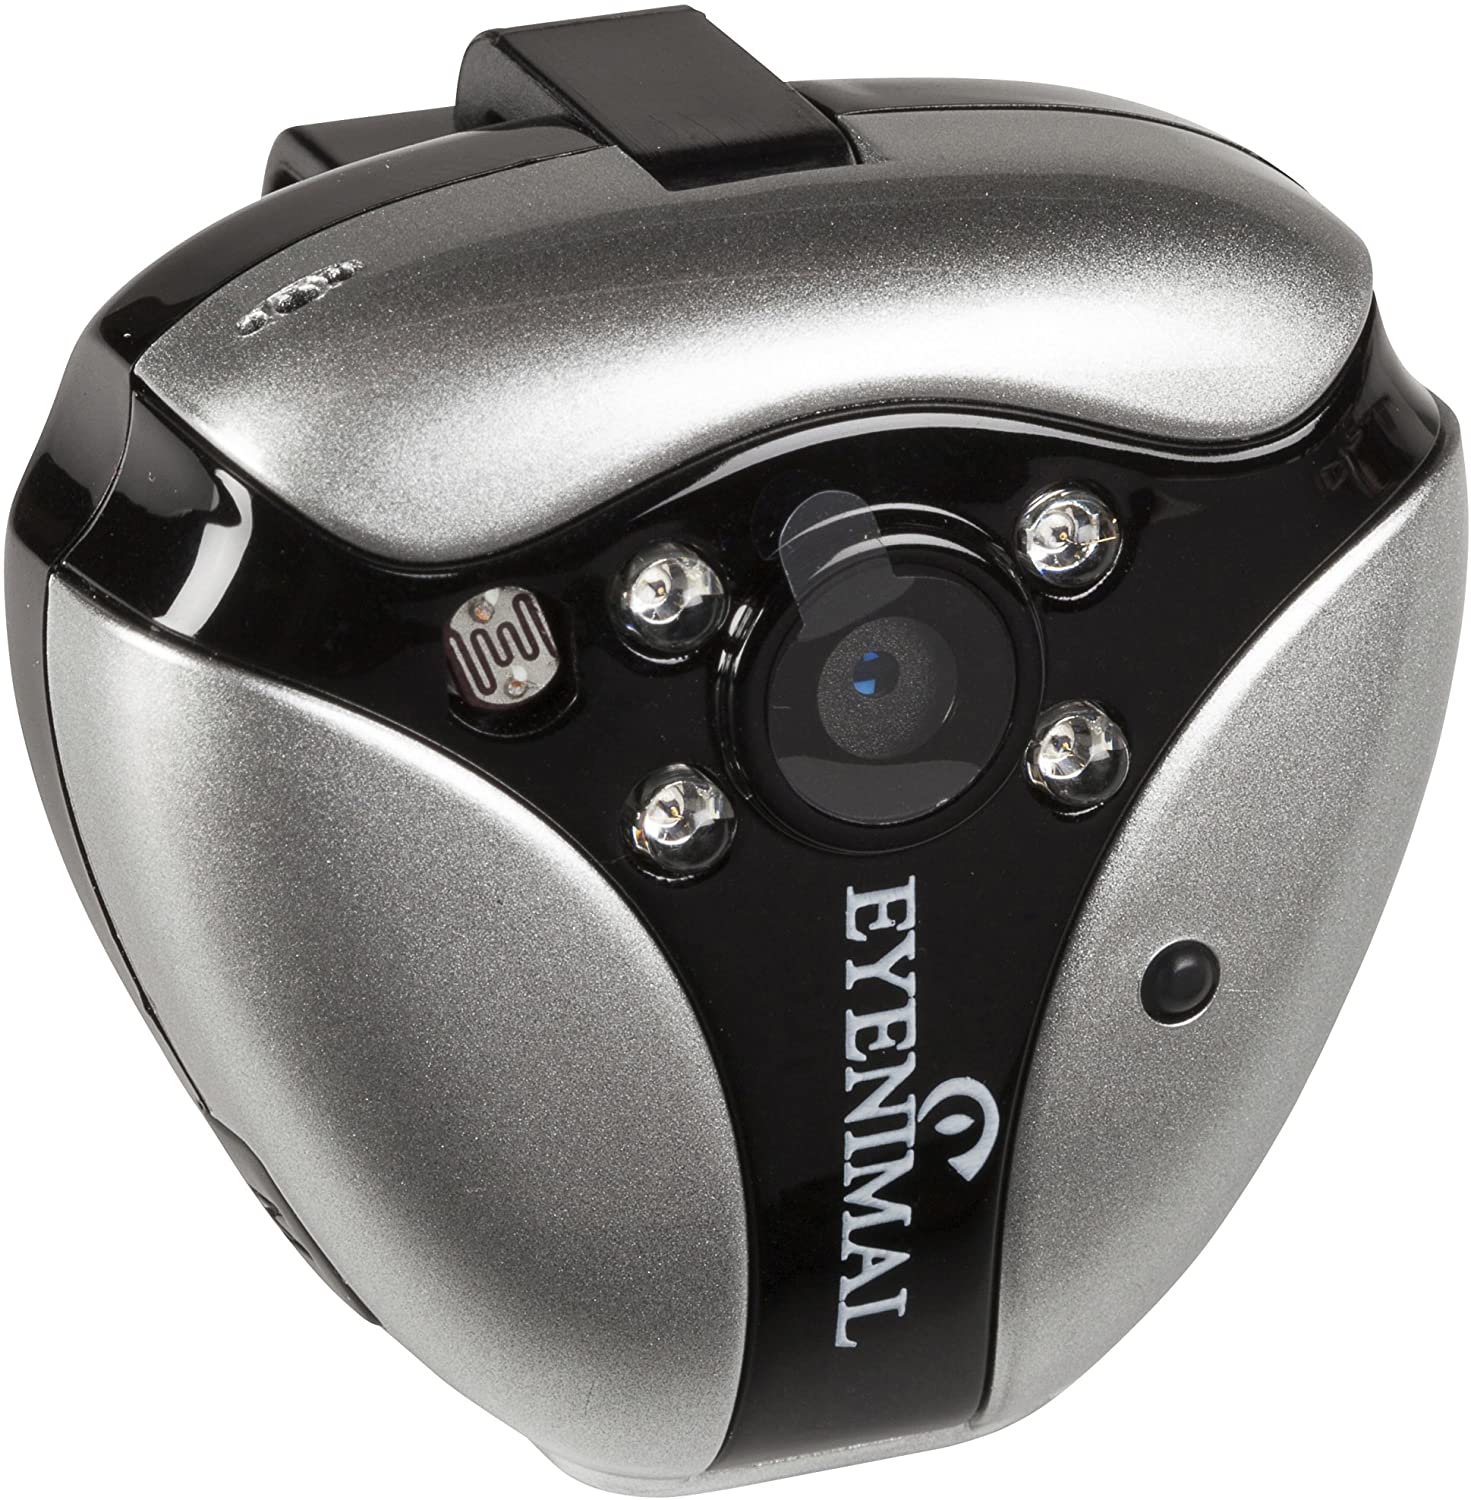 DOGTEK Eyenimal Camera with Built-In Night Vision